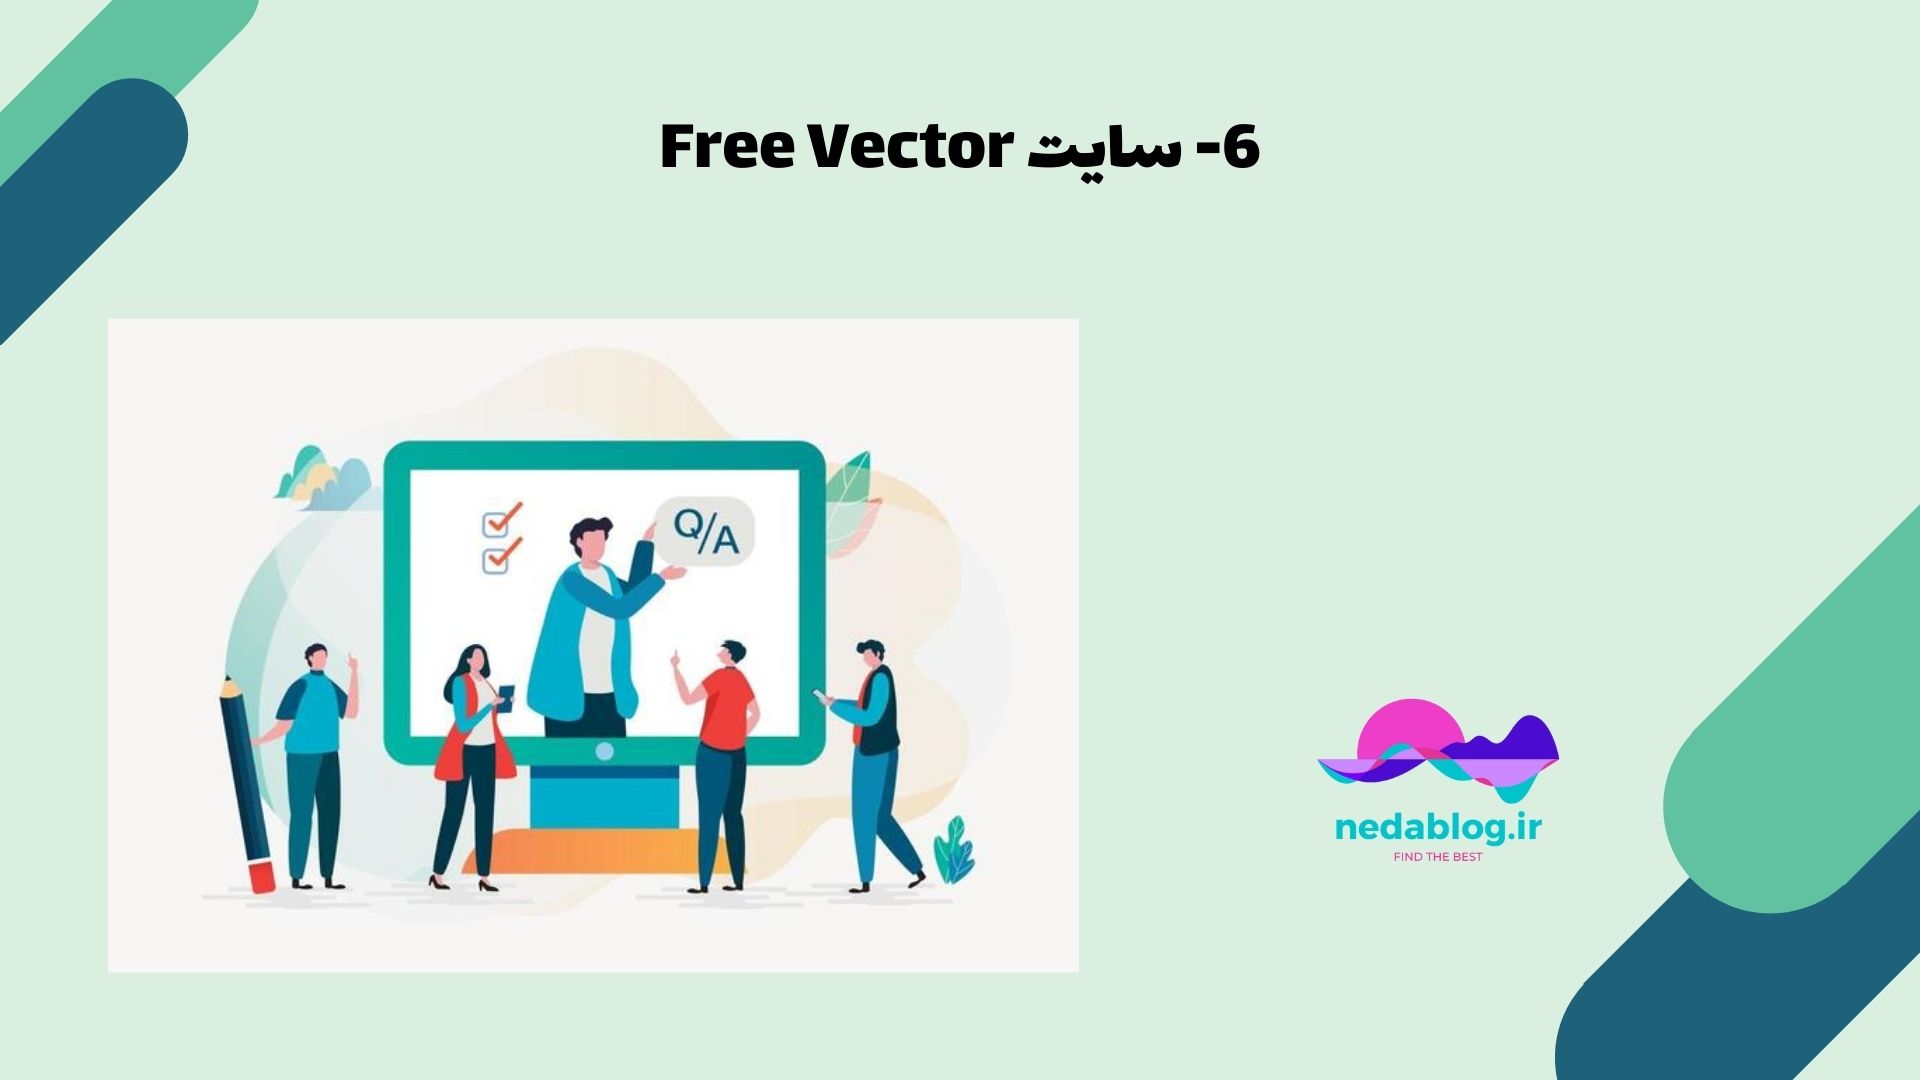 سایت Free Vector